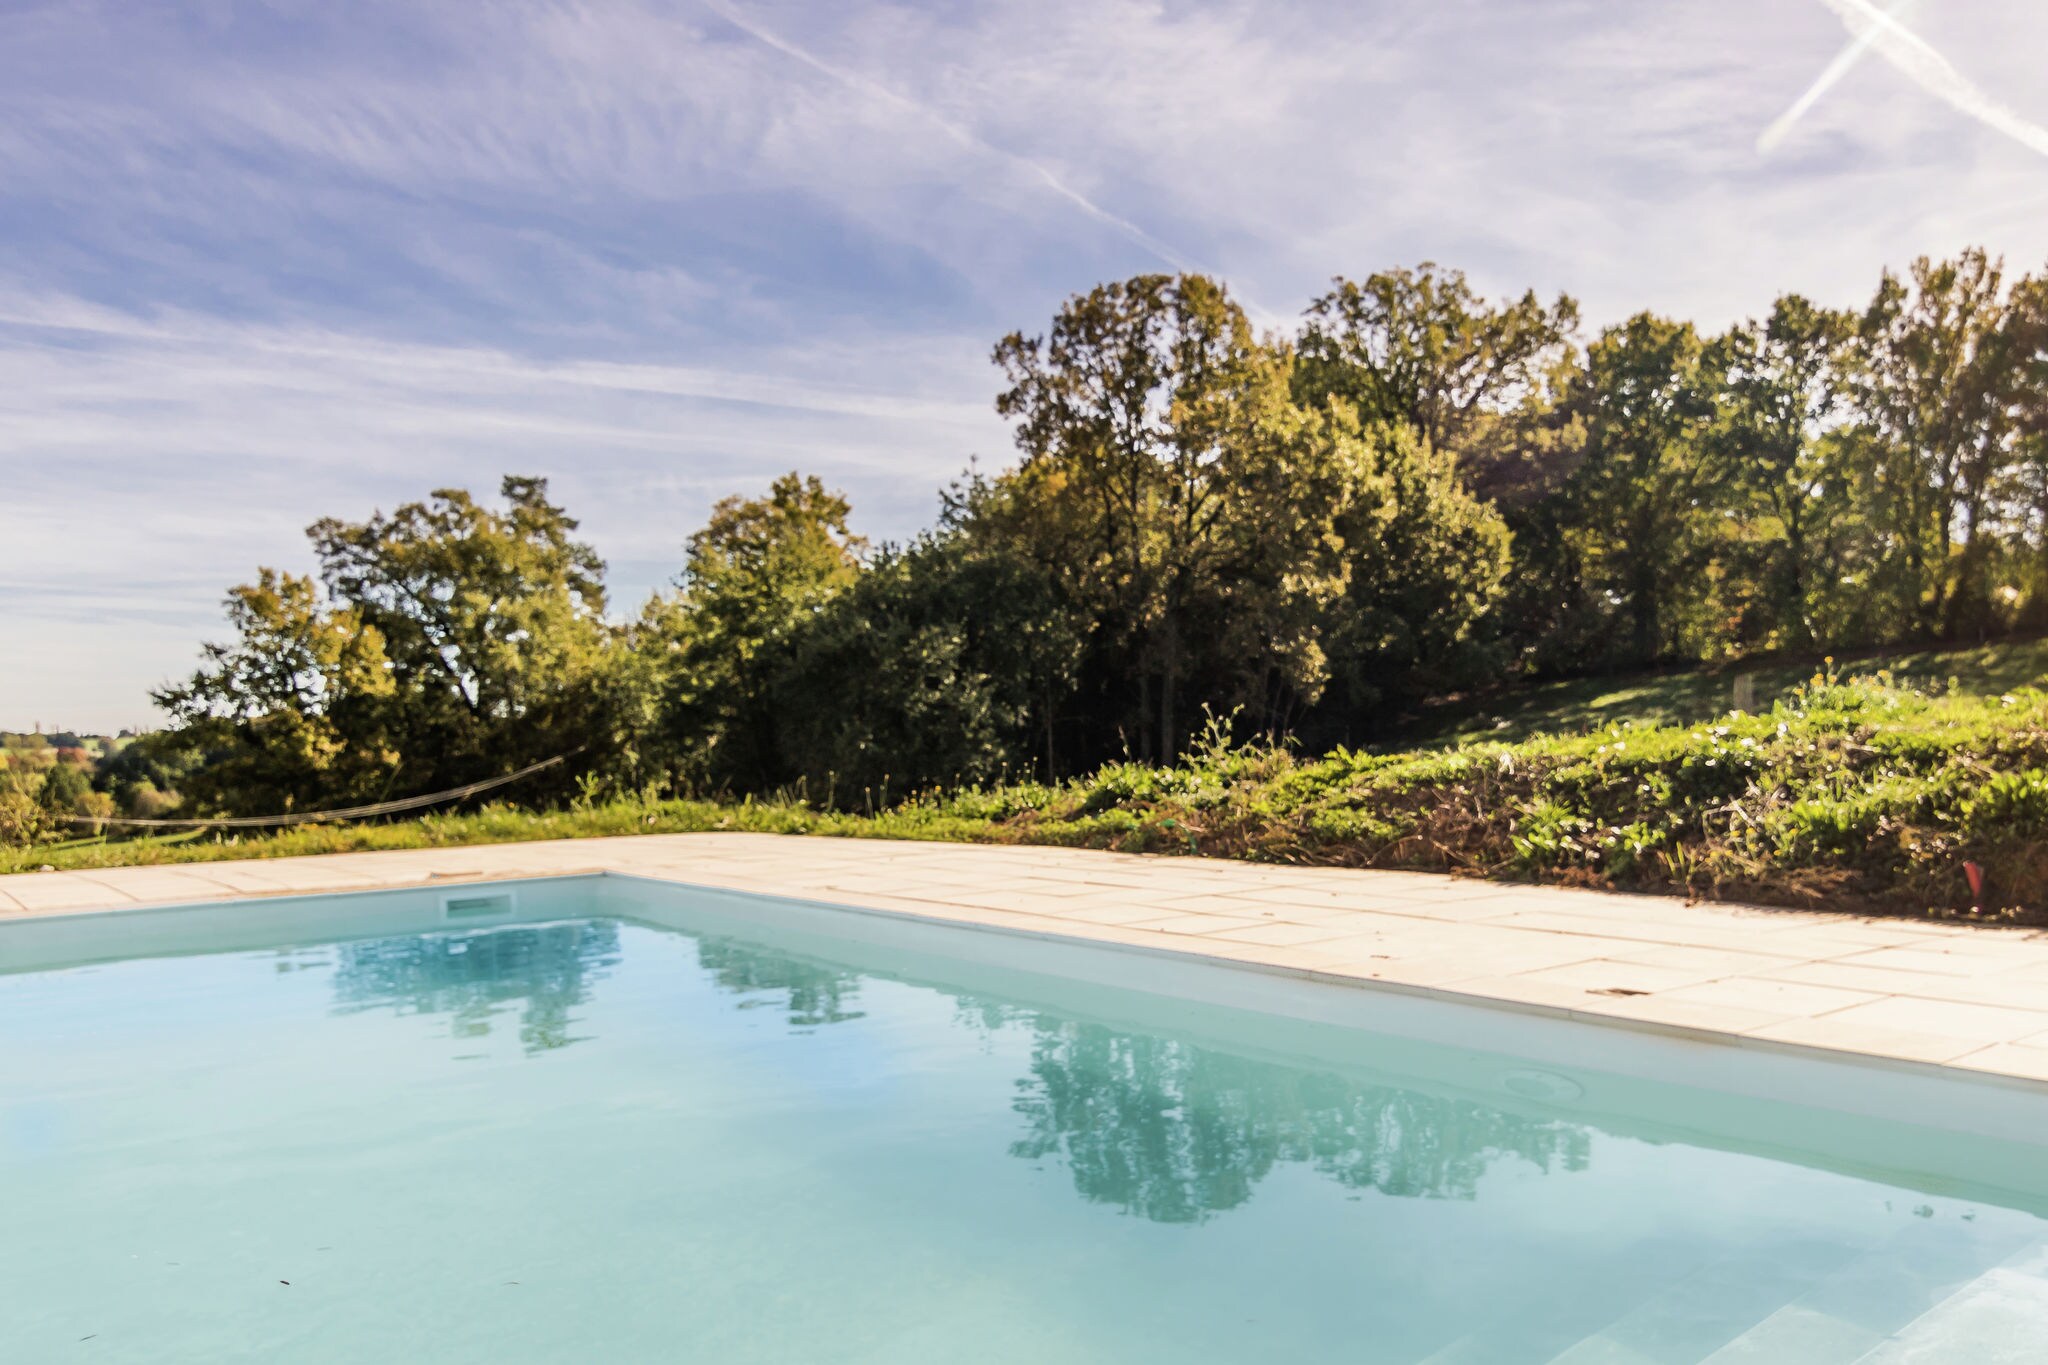 Luxuriöse Villa mit Swimmingpool in Limeyrat, Frankreich